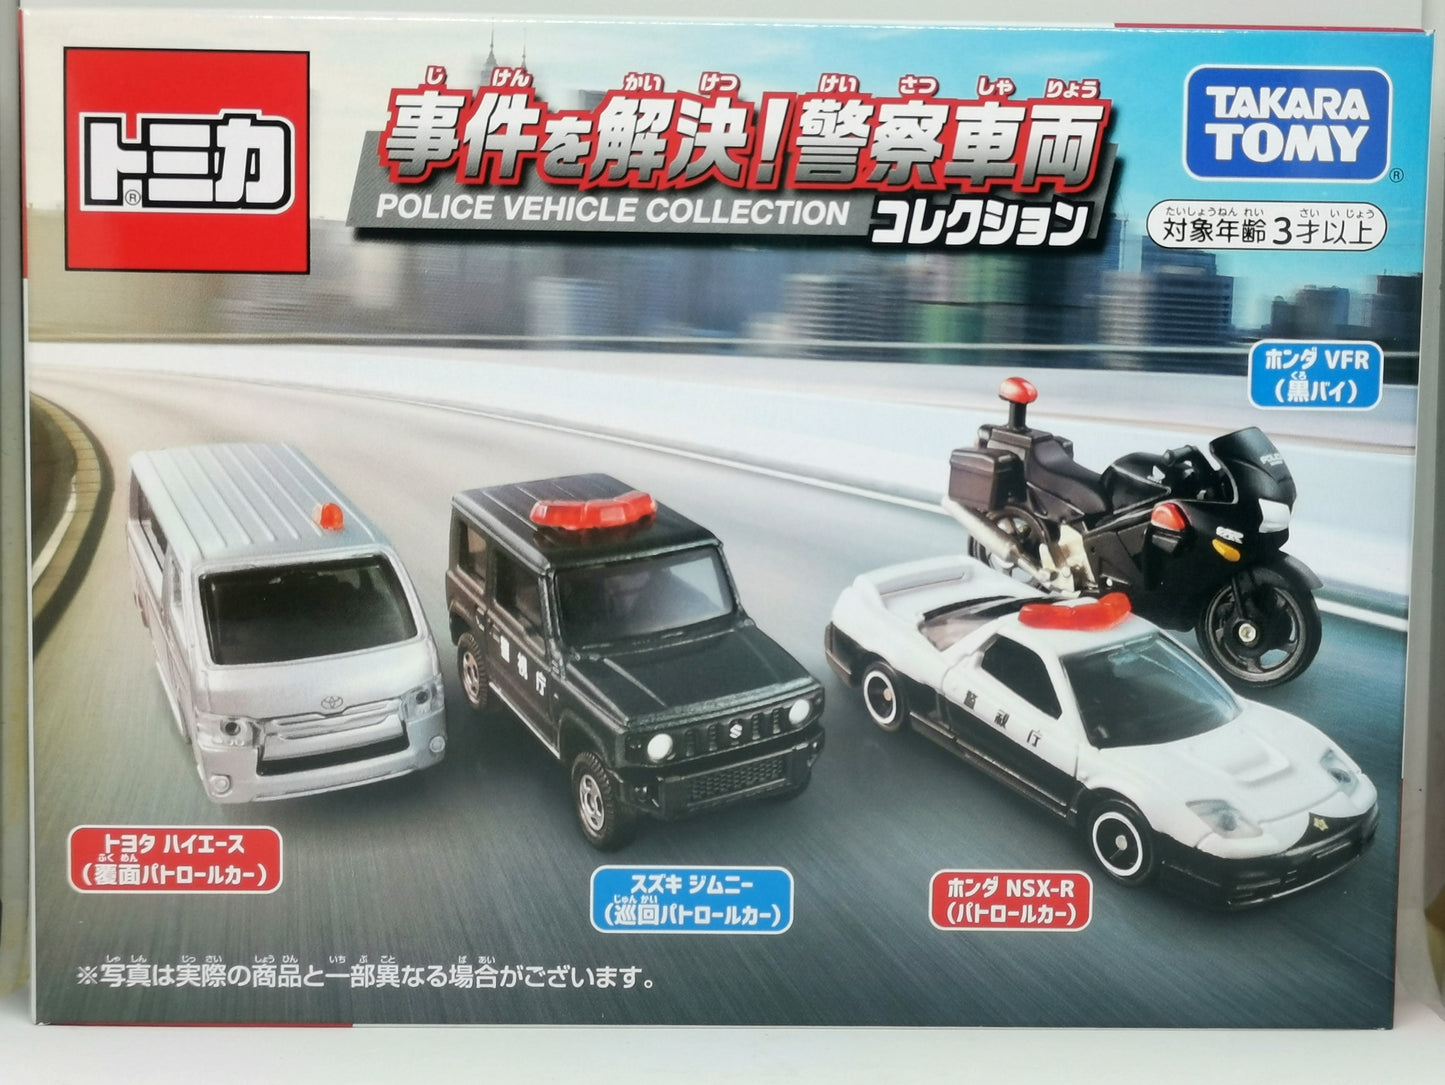 Tomica Gift Set Japan Police Vehicle Collection Takara Tomy